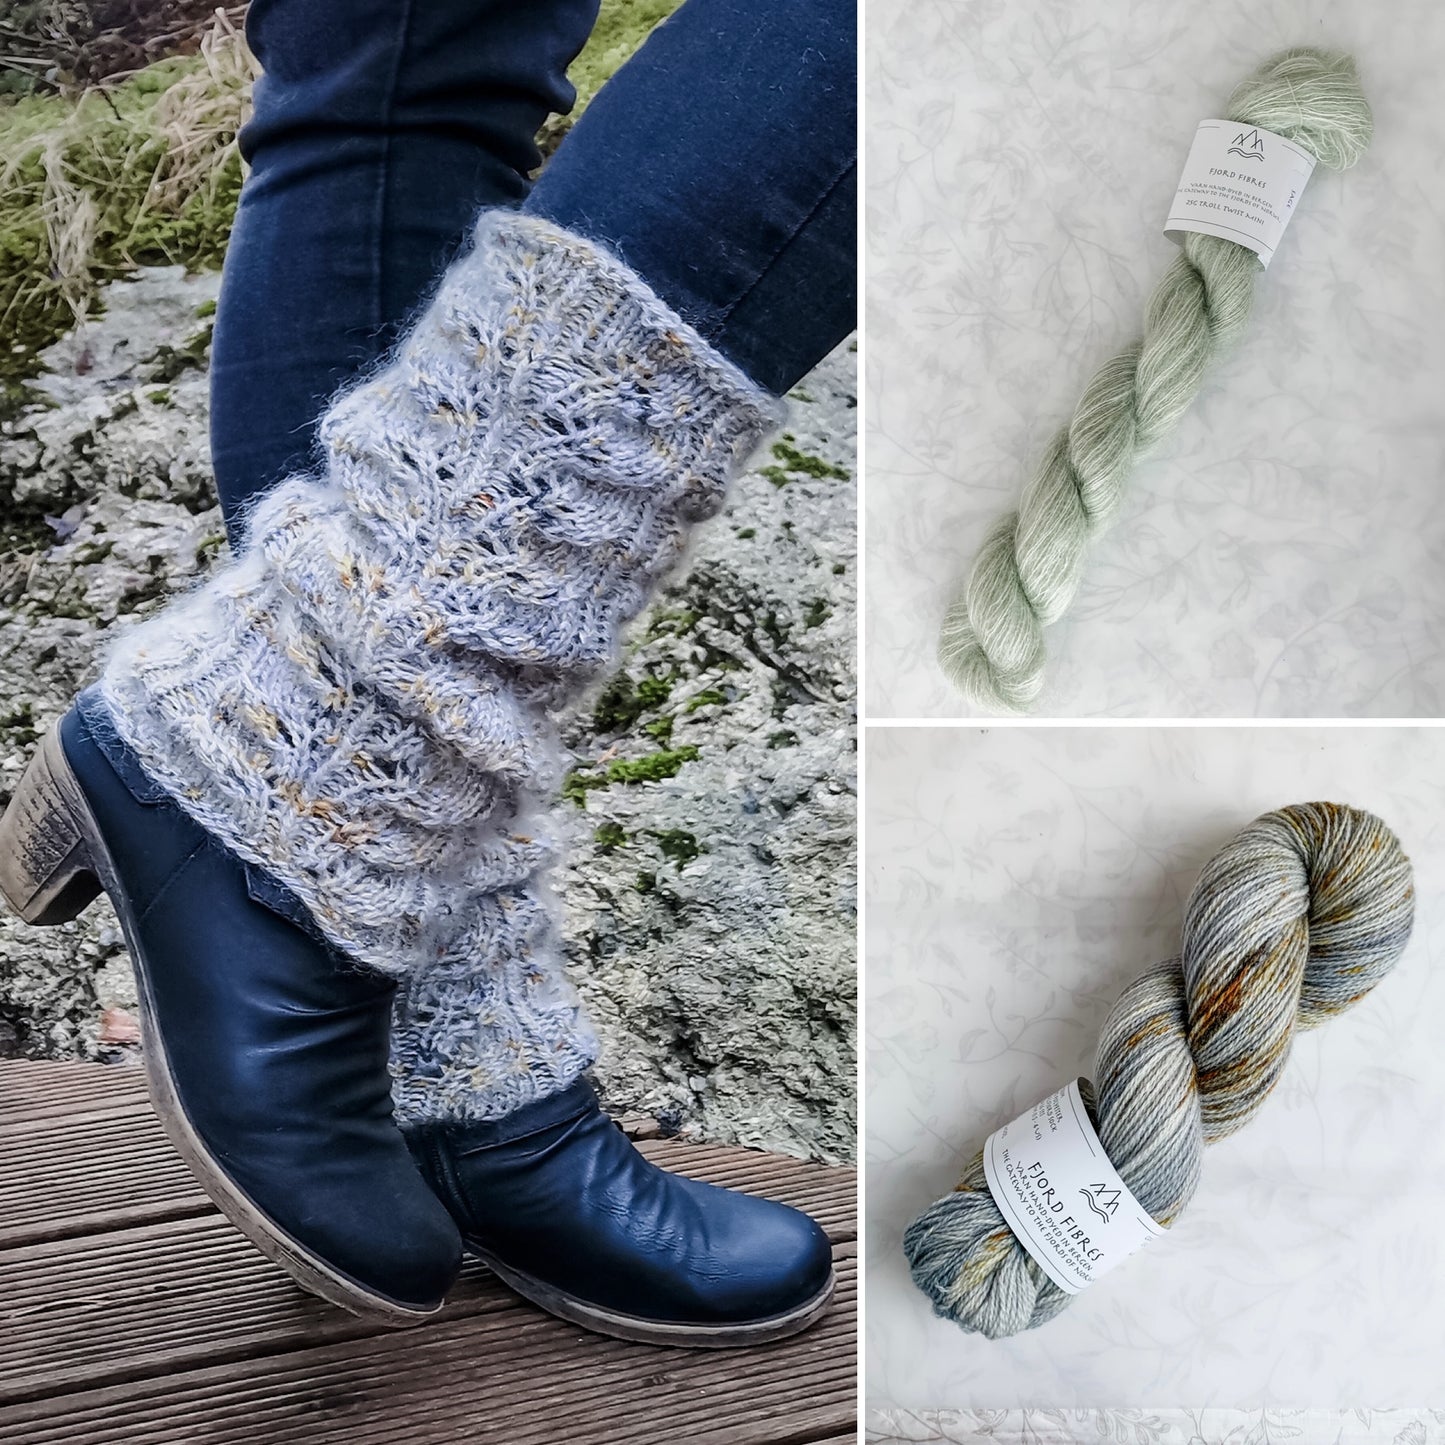 Sarina Leg Warmers Yarn Kit - Oxidation/Sage - Yarn and Printed Pattern in English/Norwegian